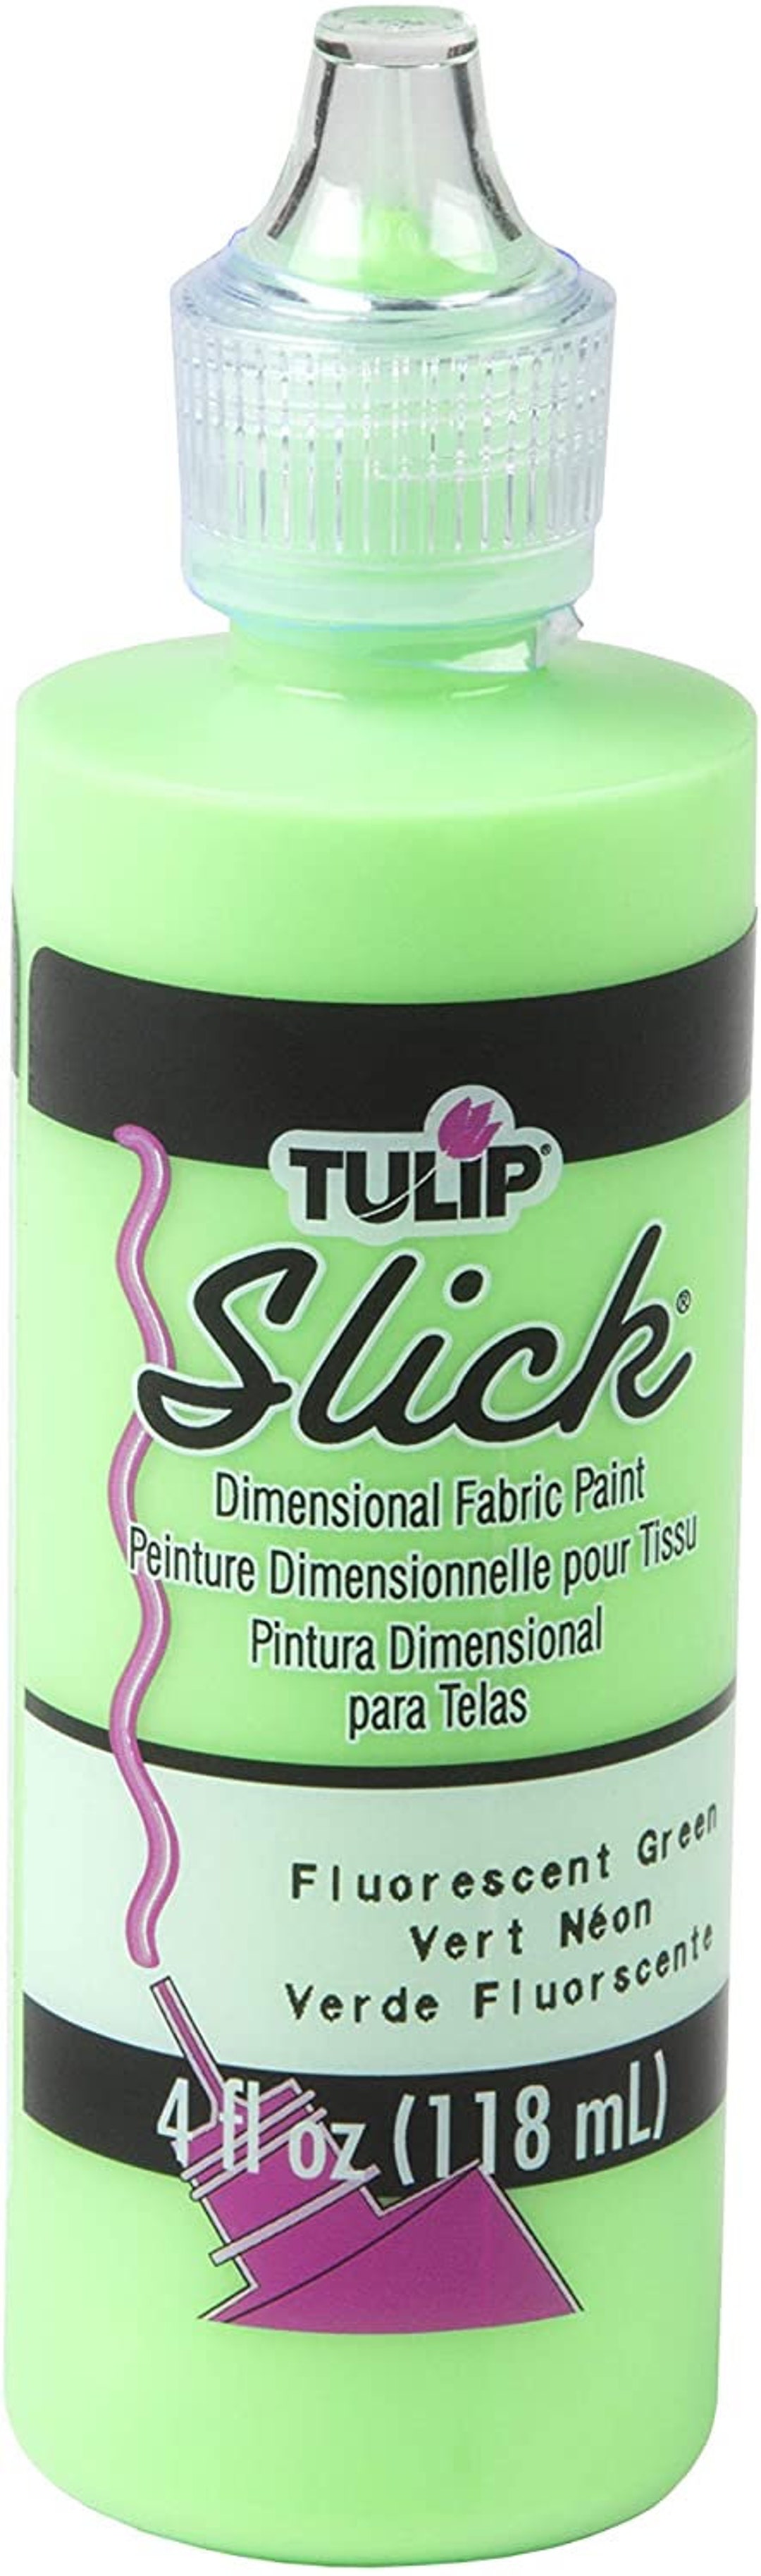 Tulip Dimensional Fabric Paint Glow, slick fluorescent green